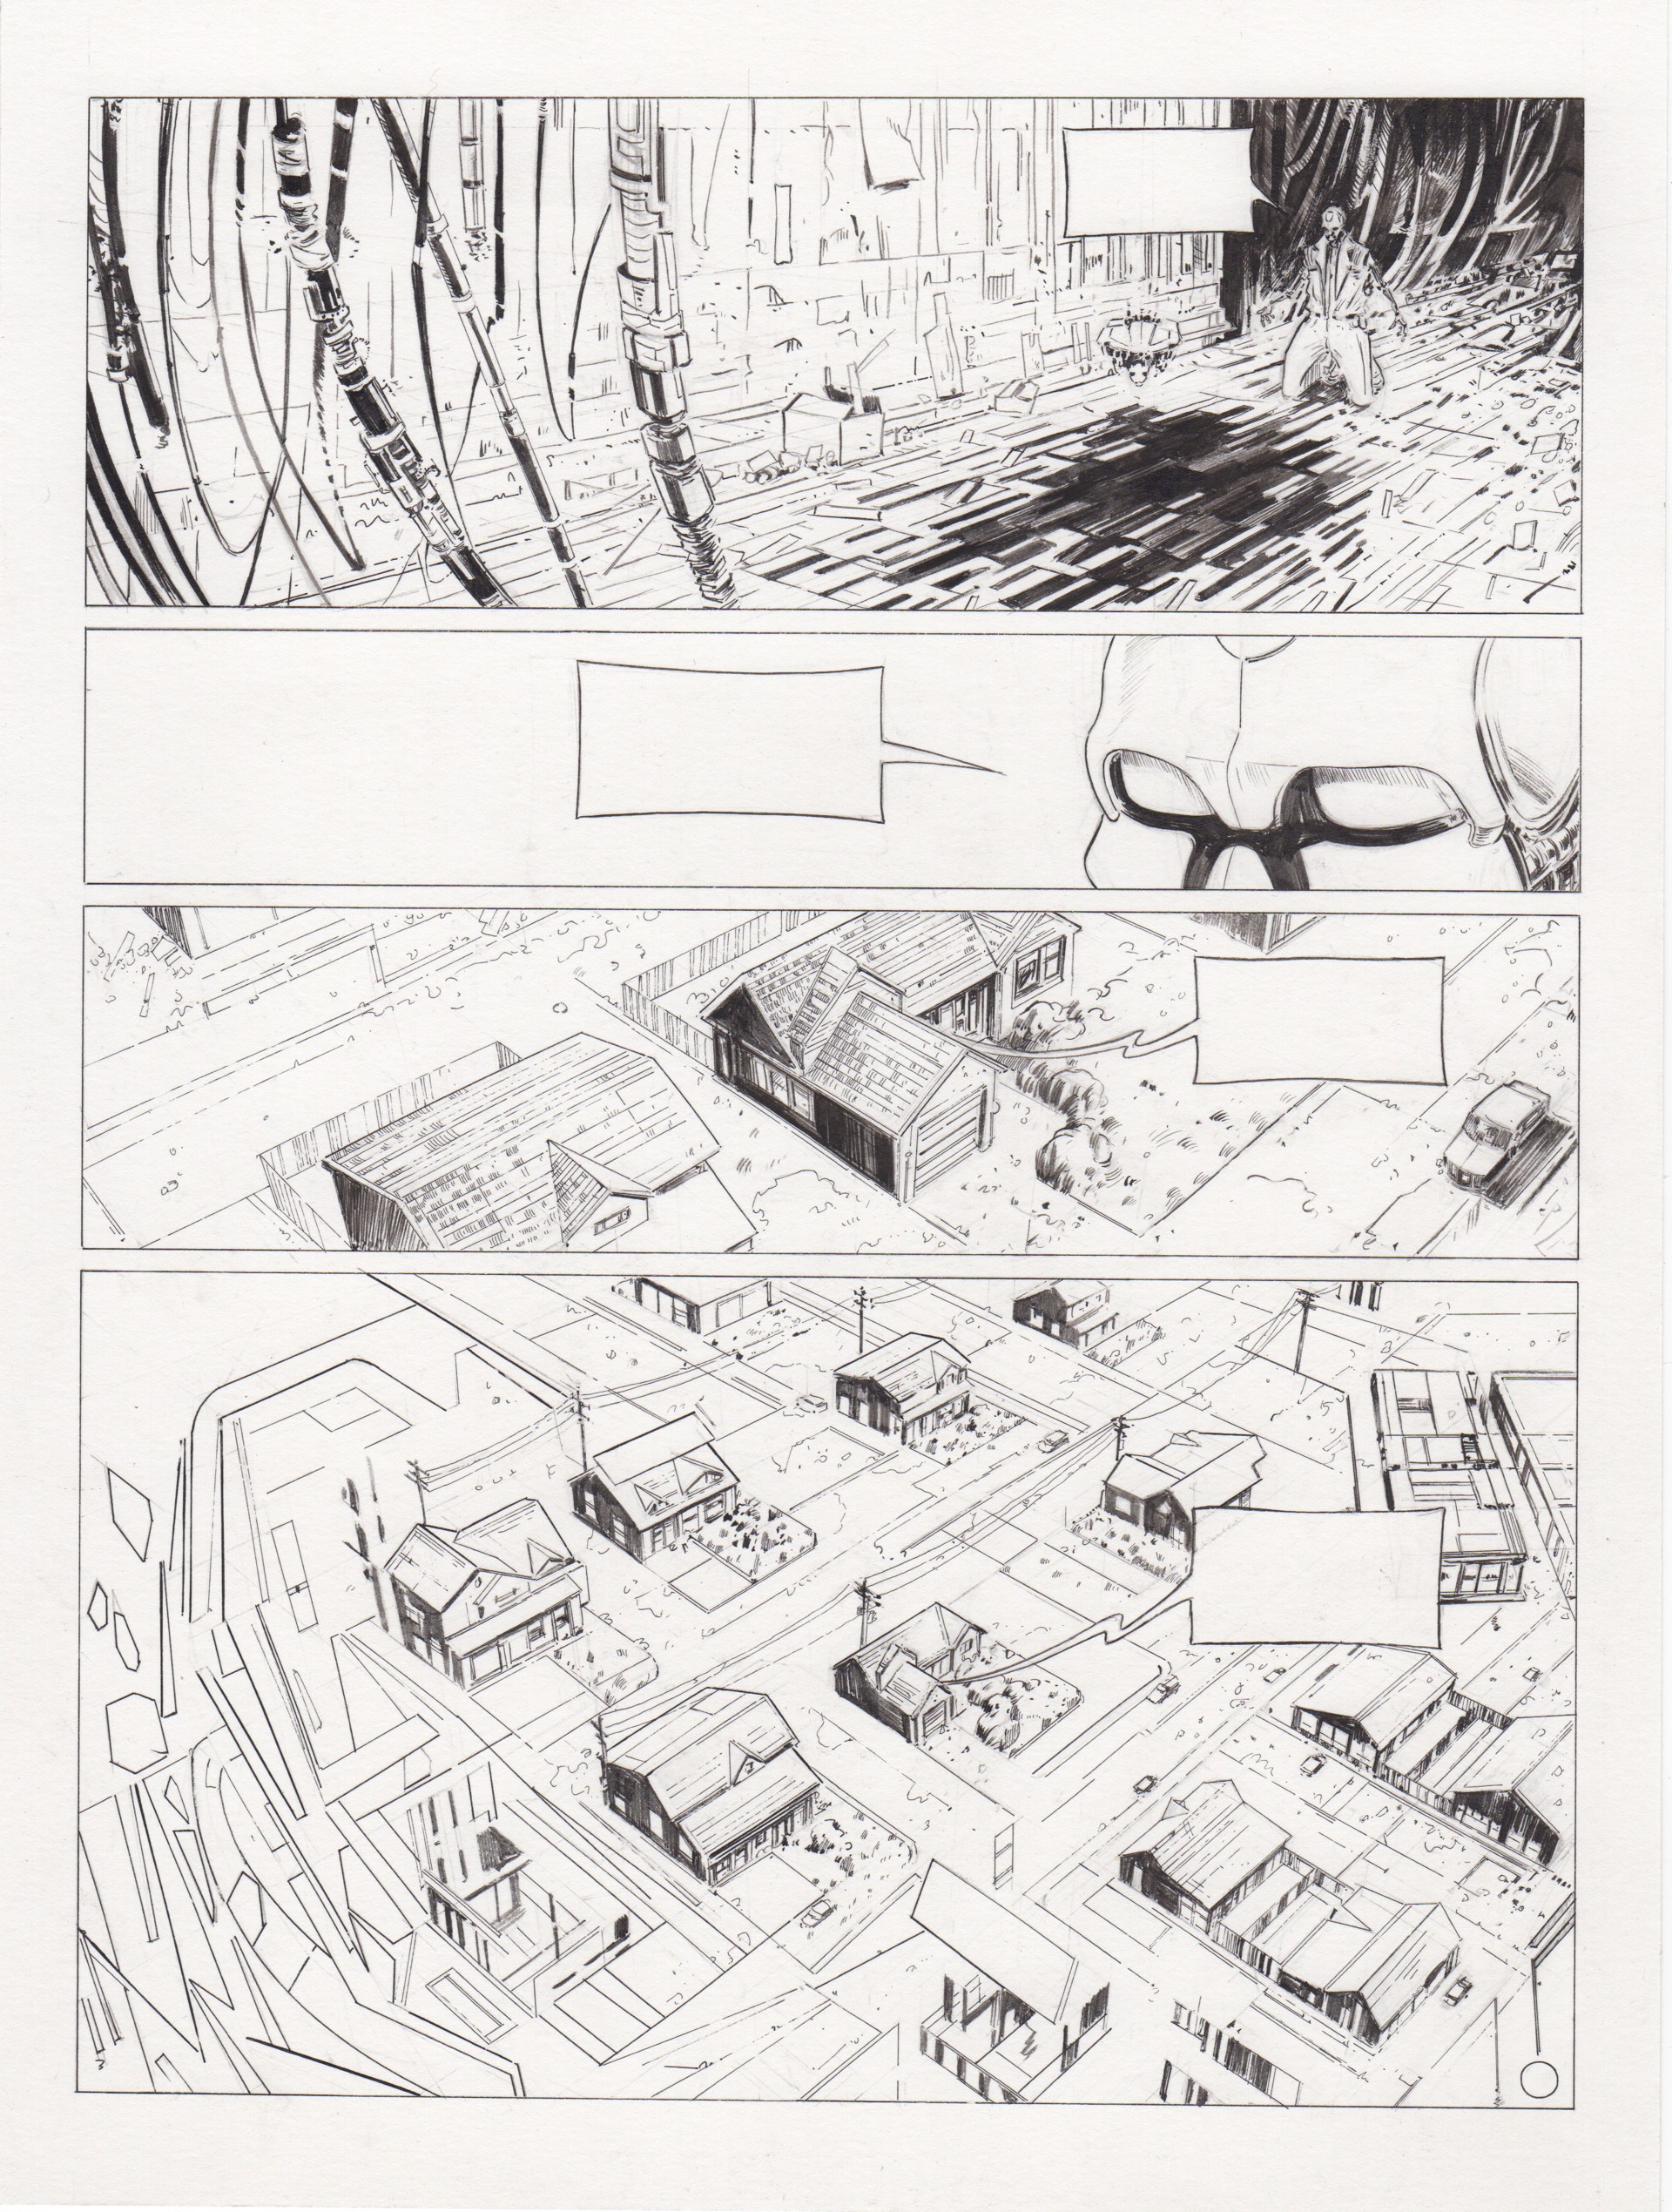 Hexagon Bridge, Issue 1, Page 15 by Richard Blake